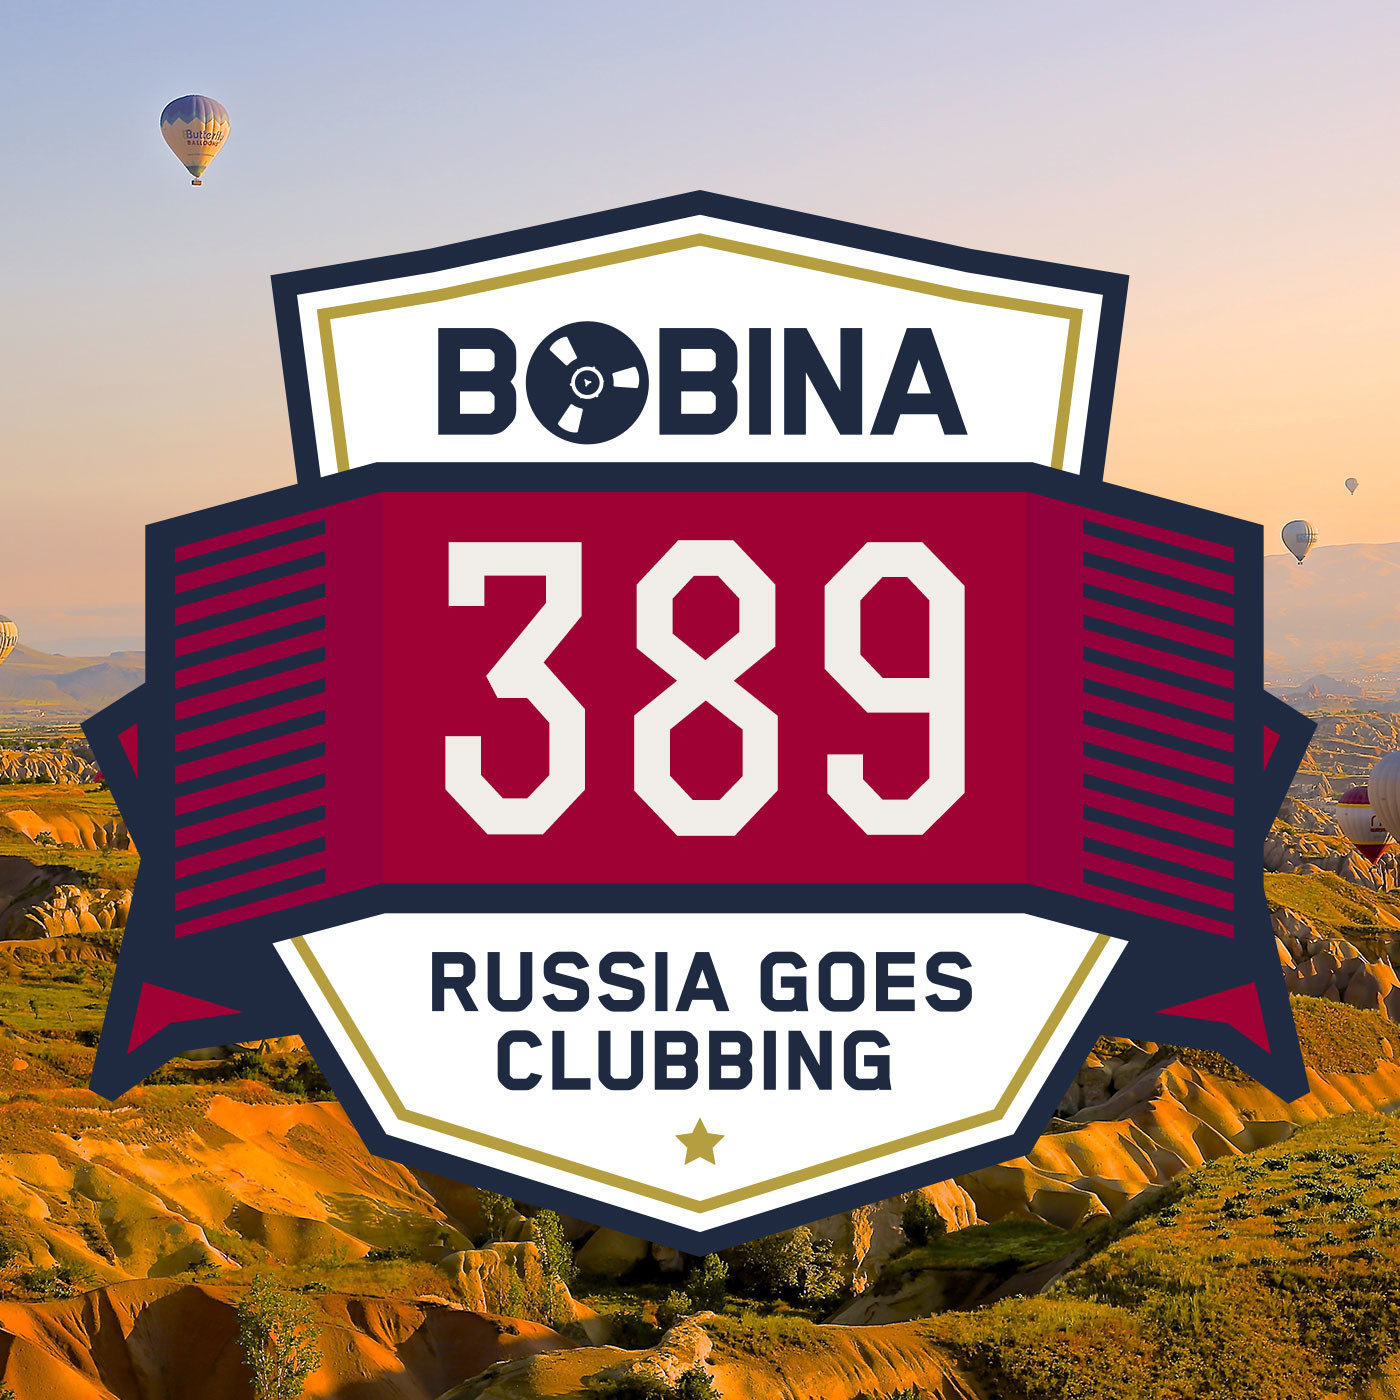 Nr. 389 Russia Goes Clubbing (Rus)